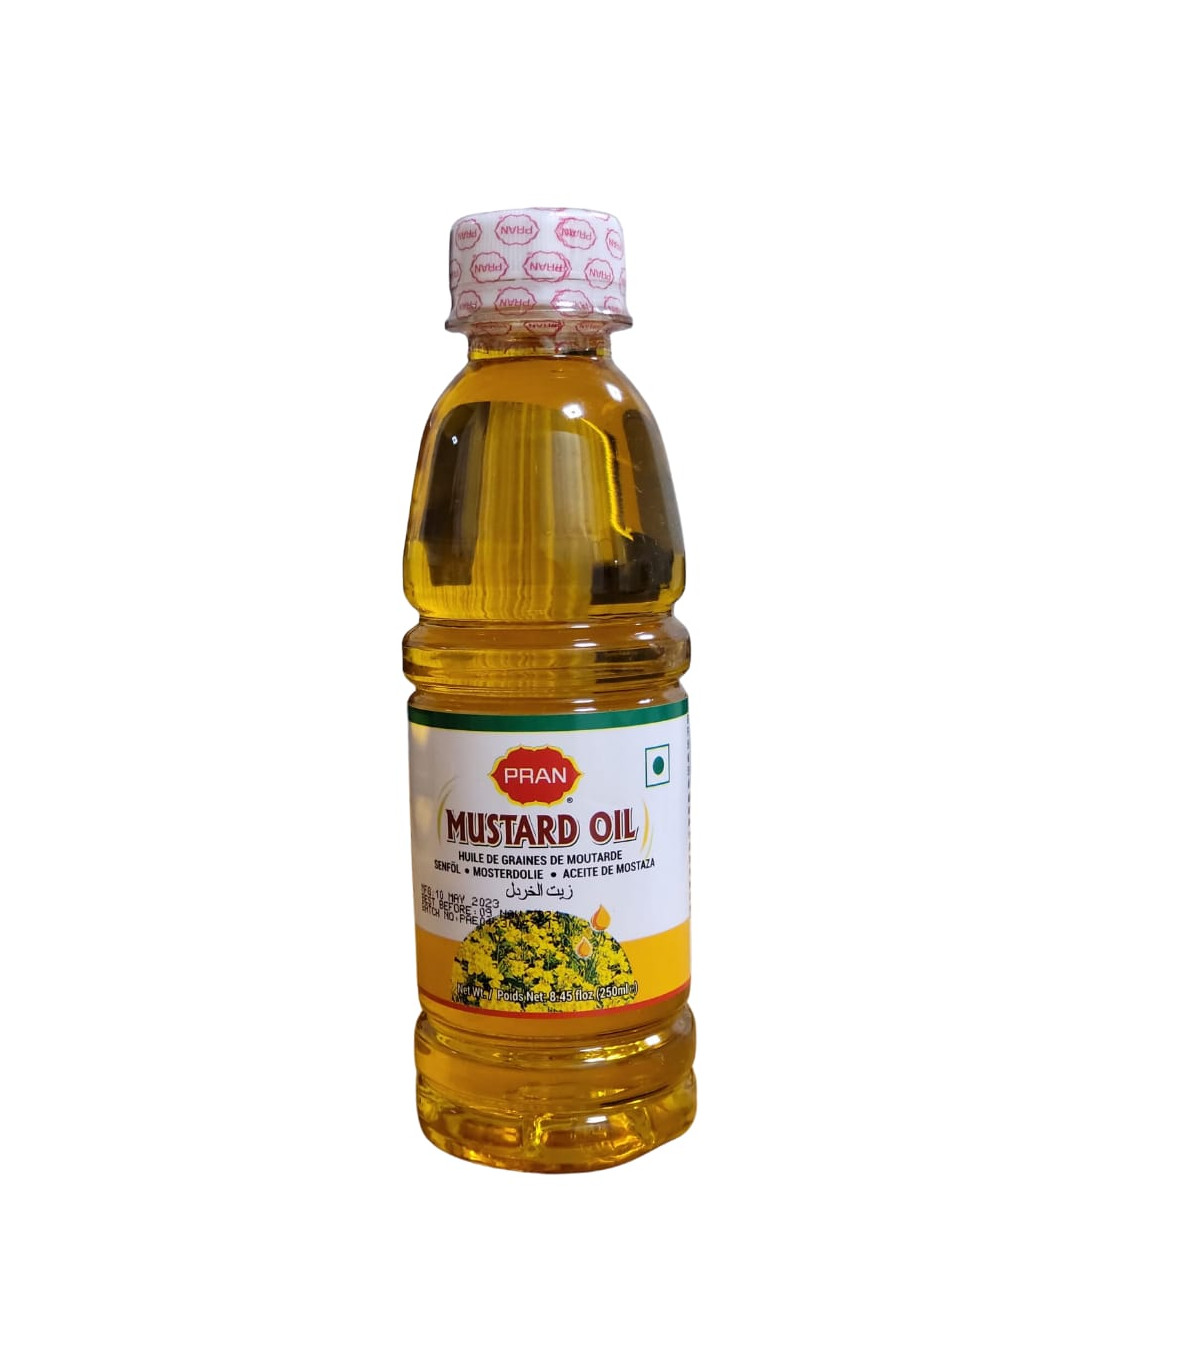 KTC 100% Pure Mustard Oil - Aceite de mostaza 250 ml